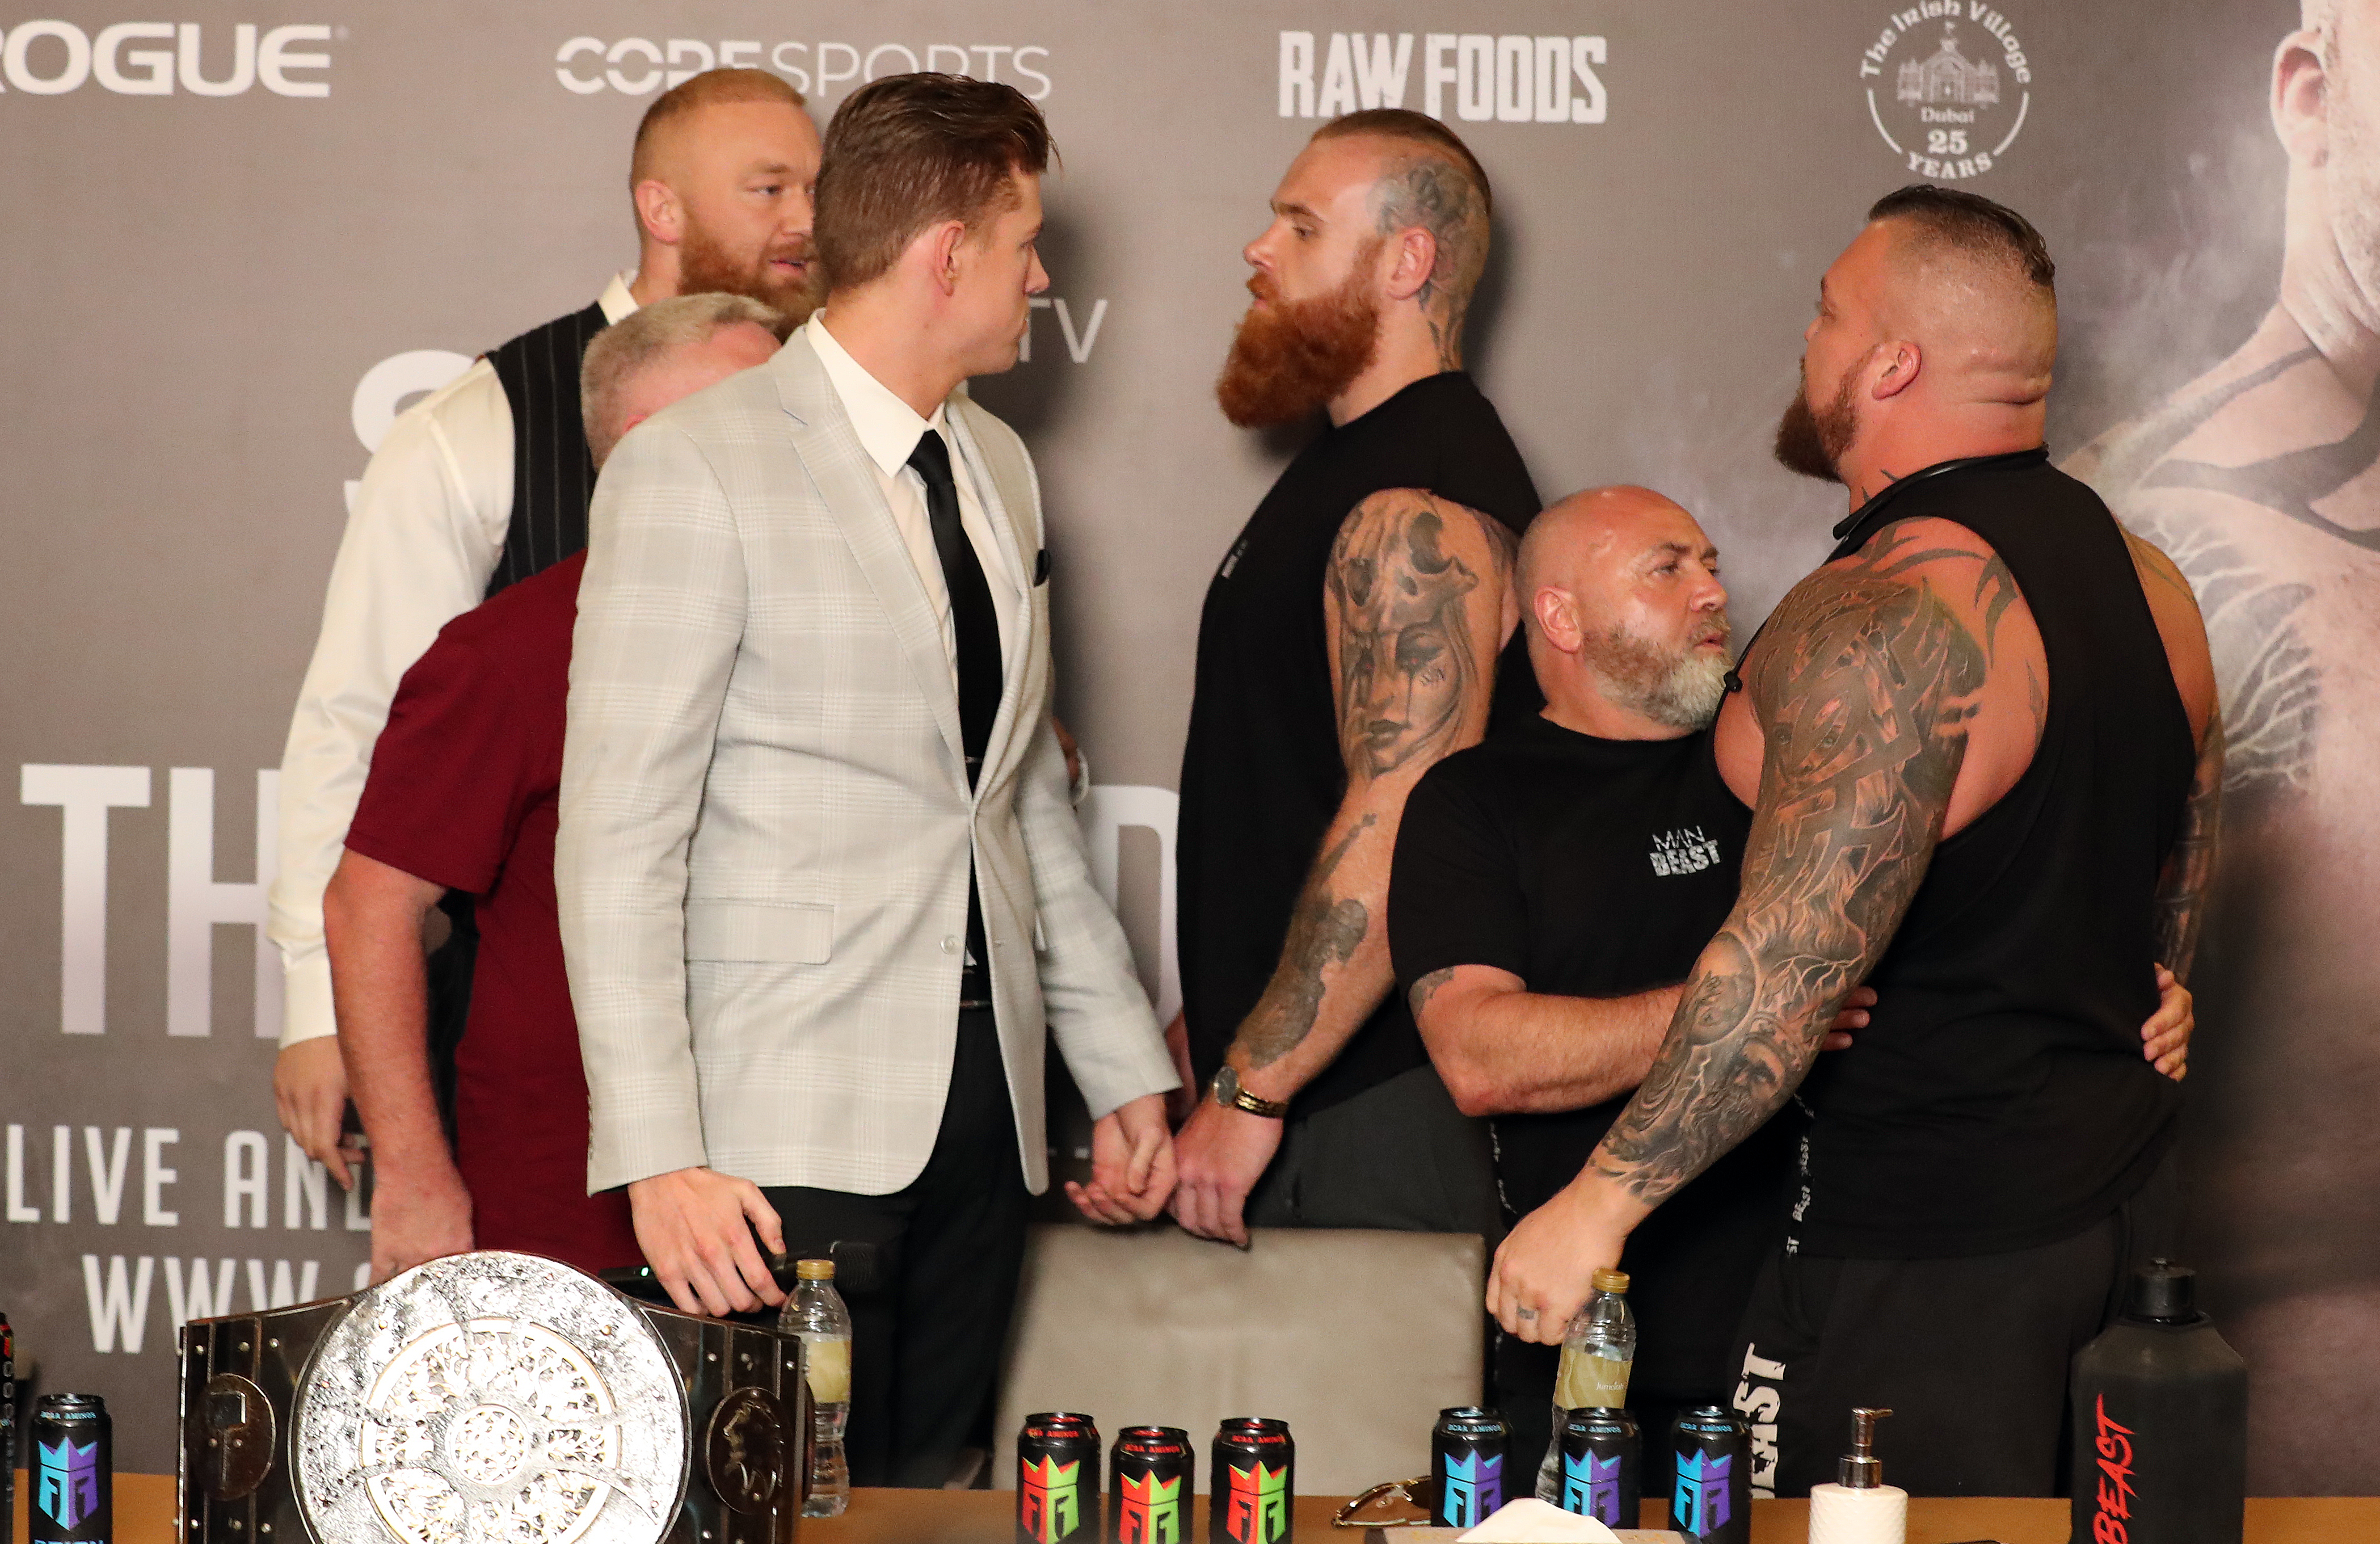 Eddie Hall vs Thor Bjornsson everything you need to know about heavyweight Dubai showdown